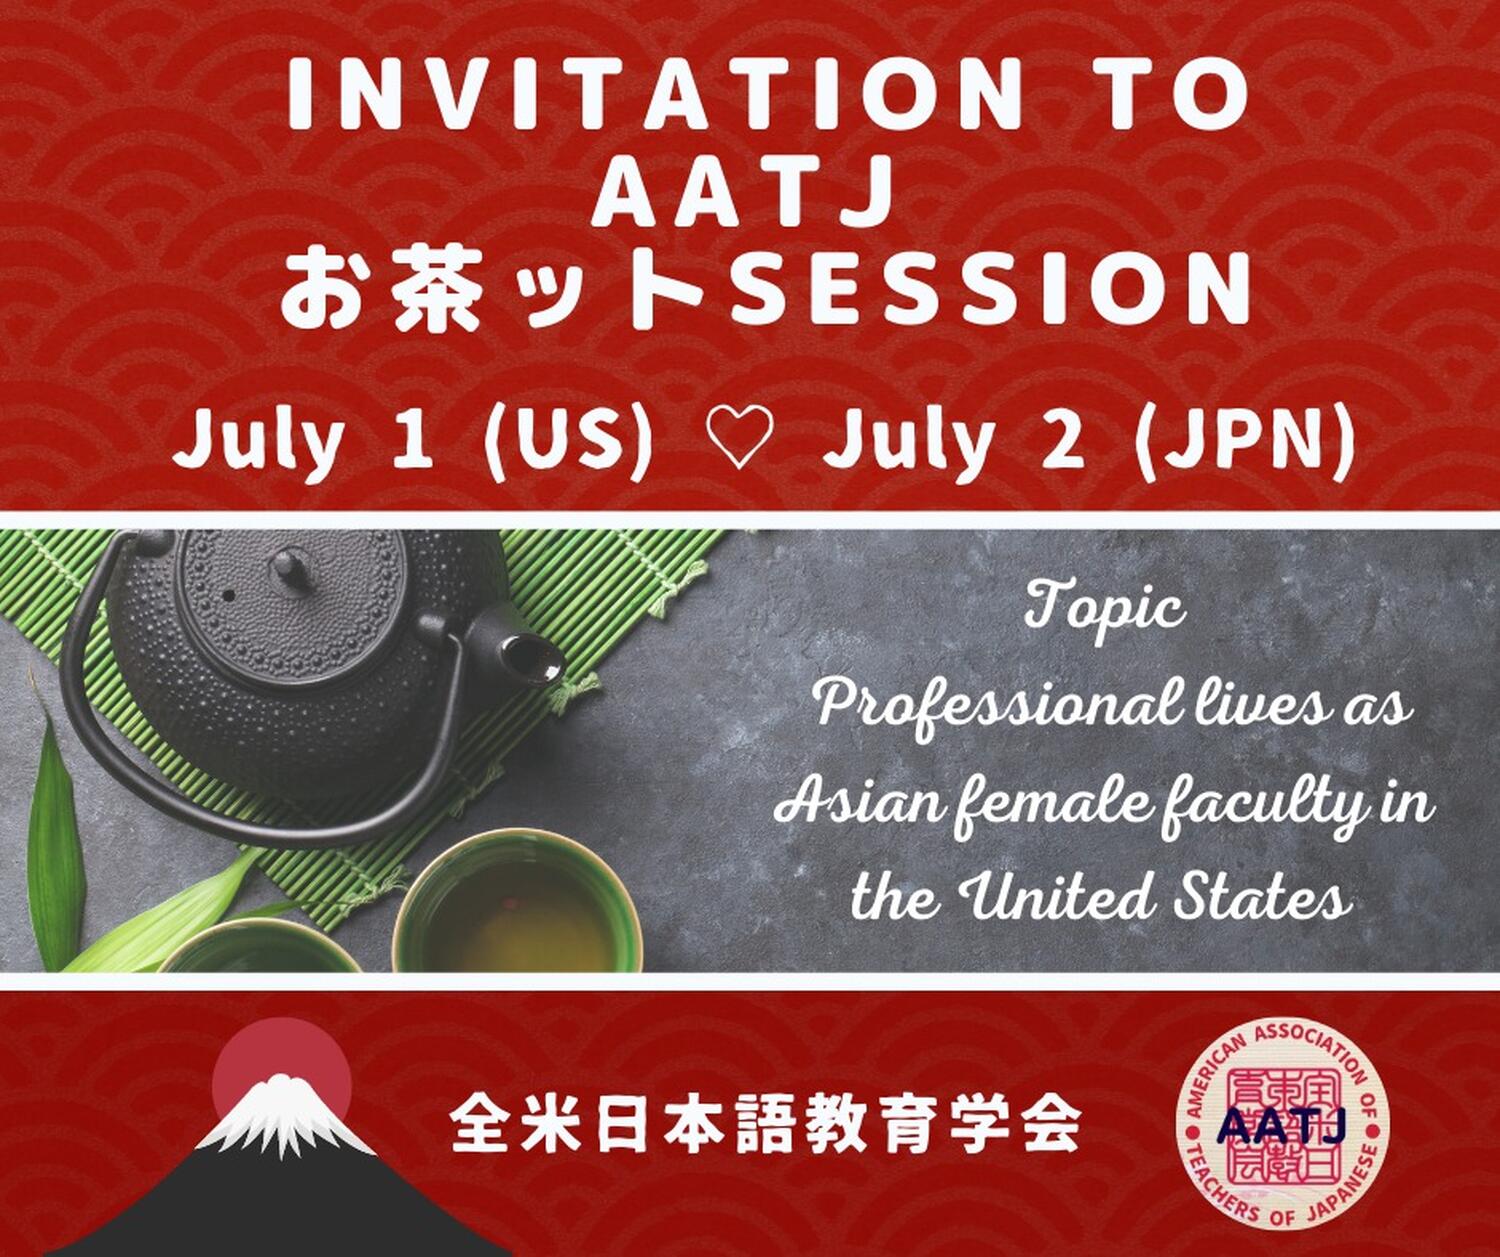 INVITATION TO AATJ お茶ット SESSION